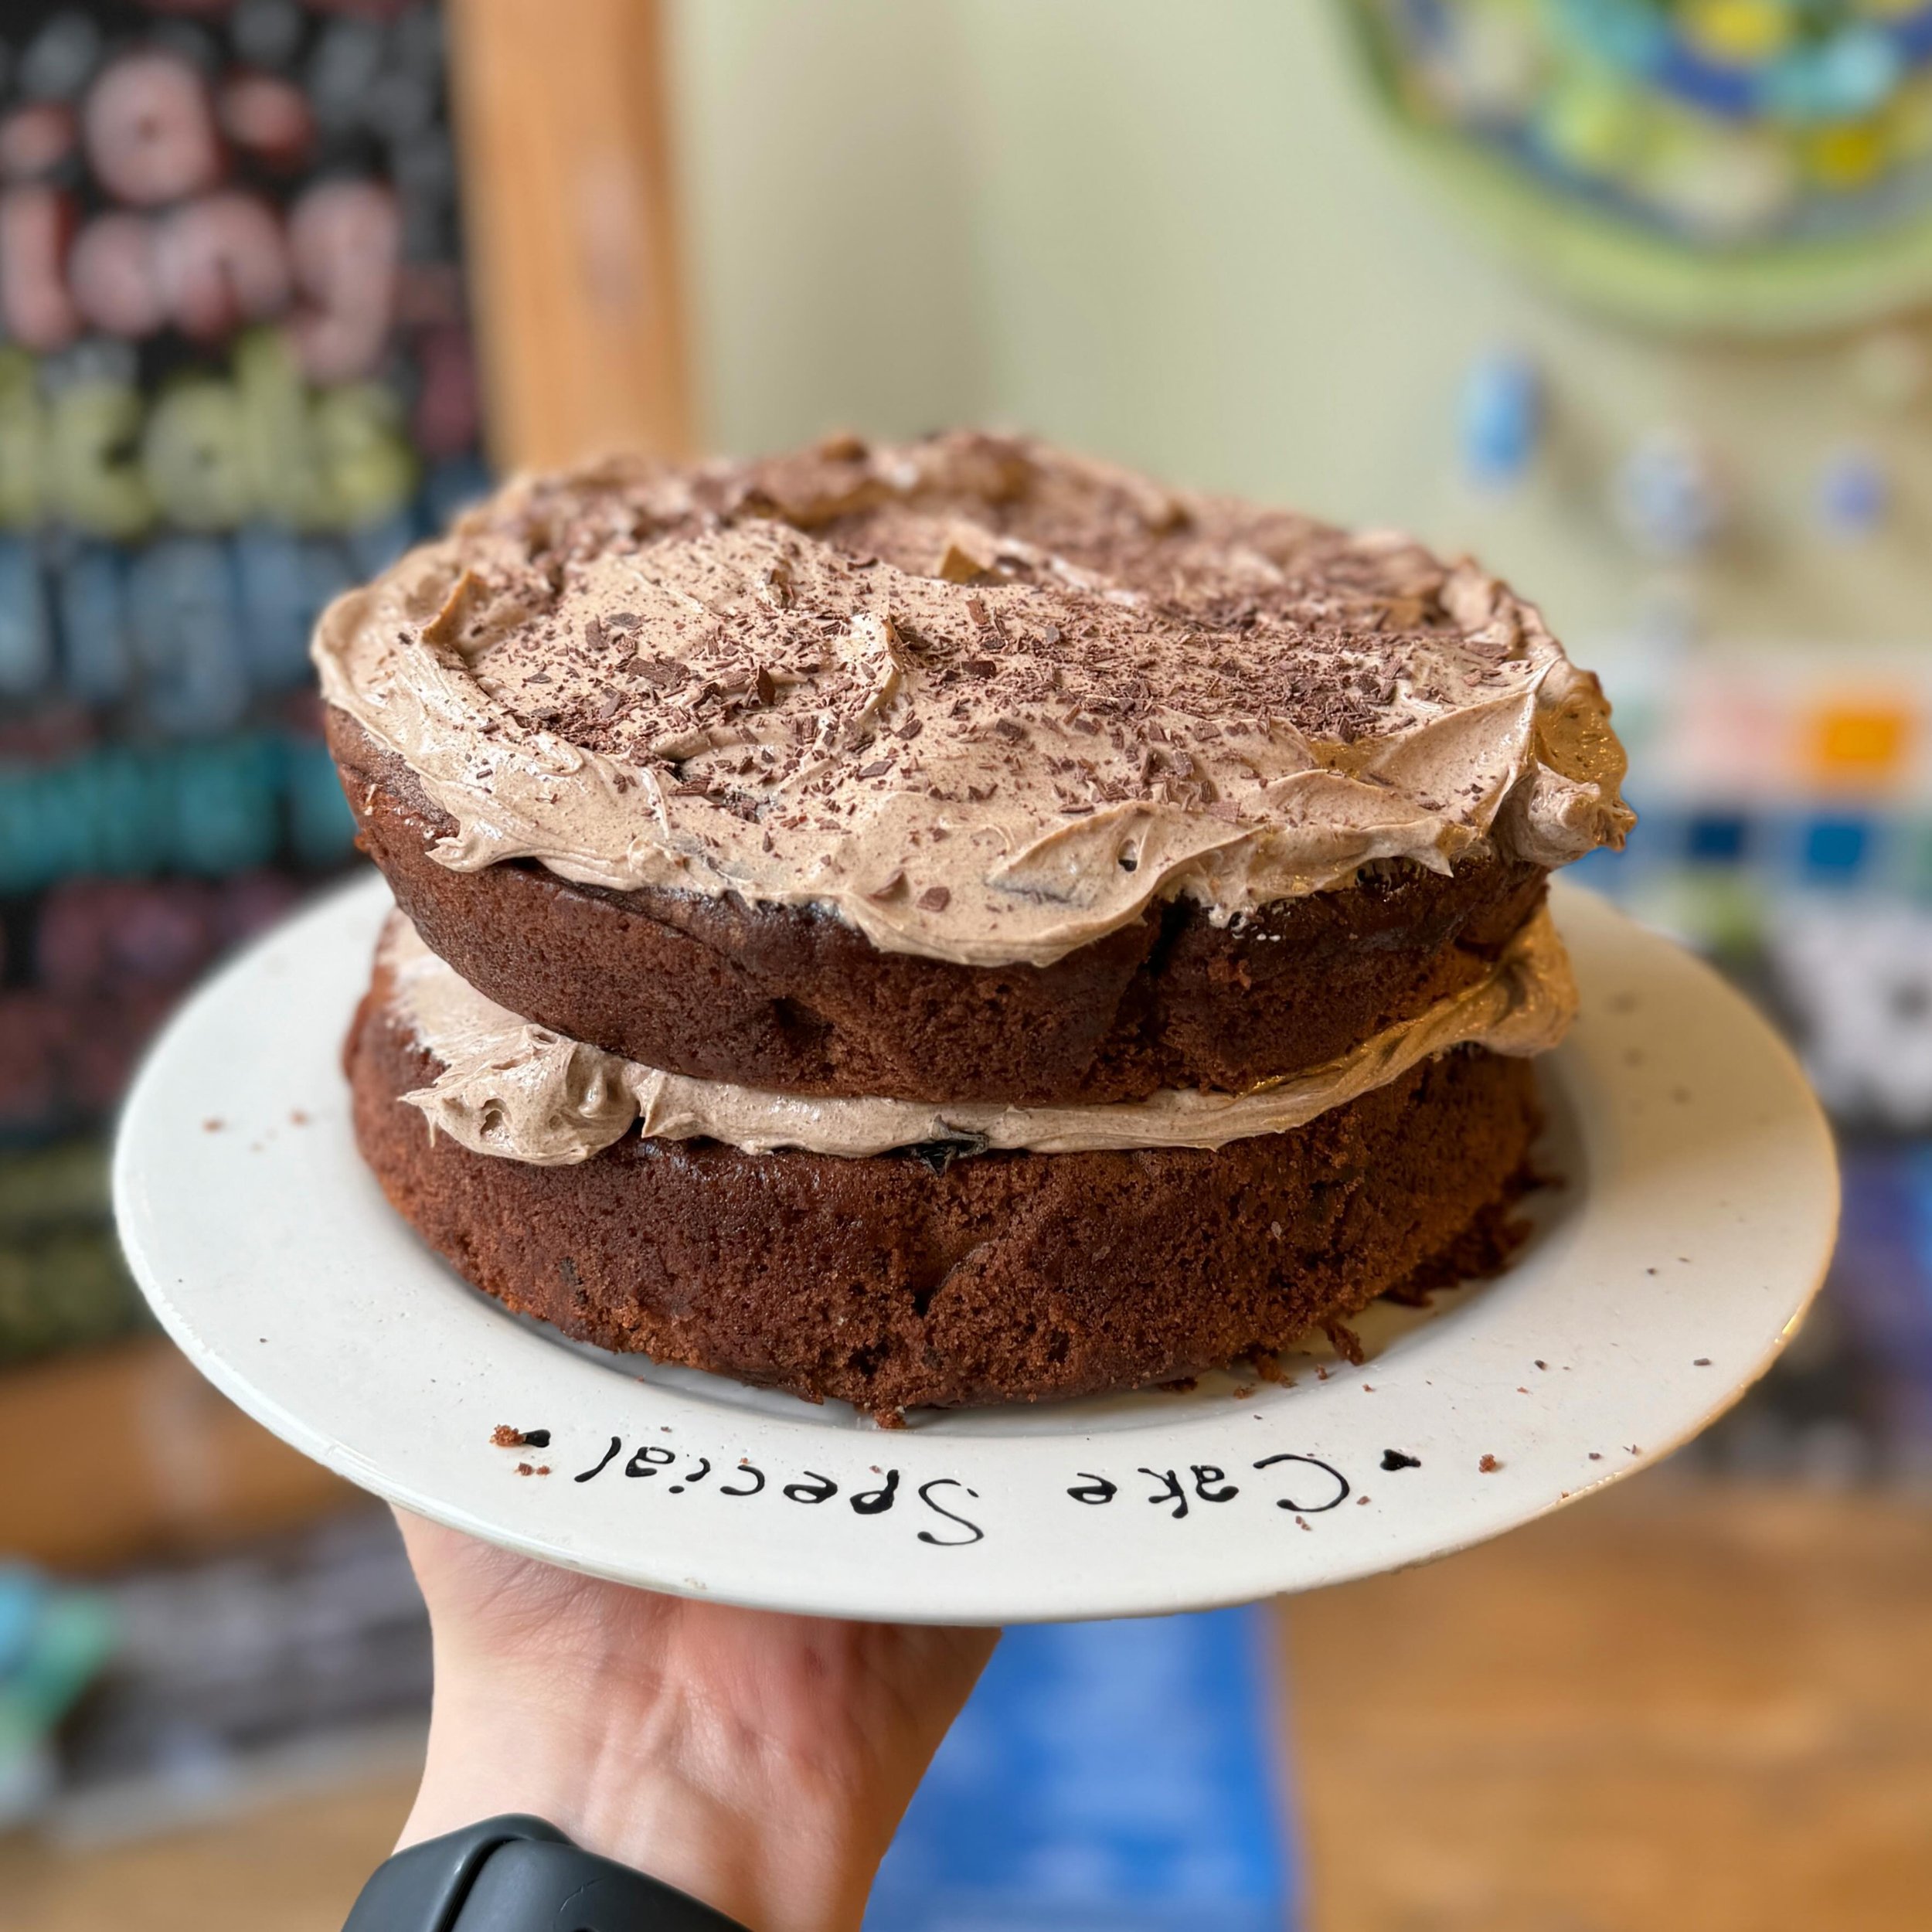 This weeks cake special is Janet&rsquo;s homemade chocolate cake (gluten free &amp; dairy free) 🍫🤎

#cake #chocolatecake #vegan #glutenfree #cobblesandclay #cobblesandclayhaworth